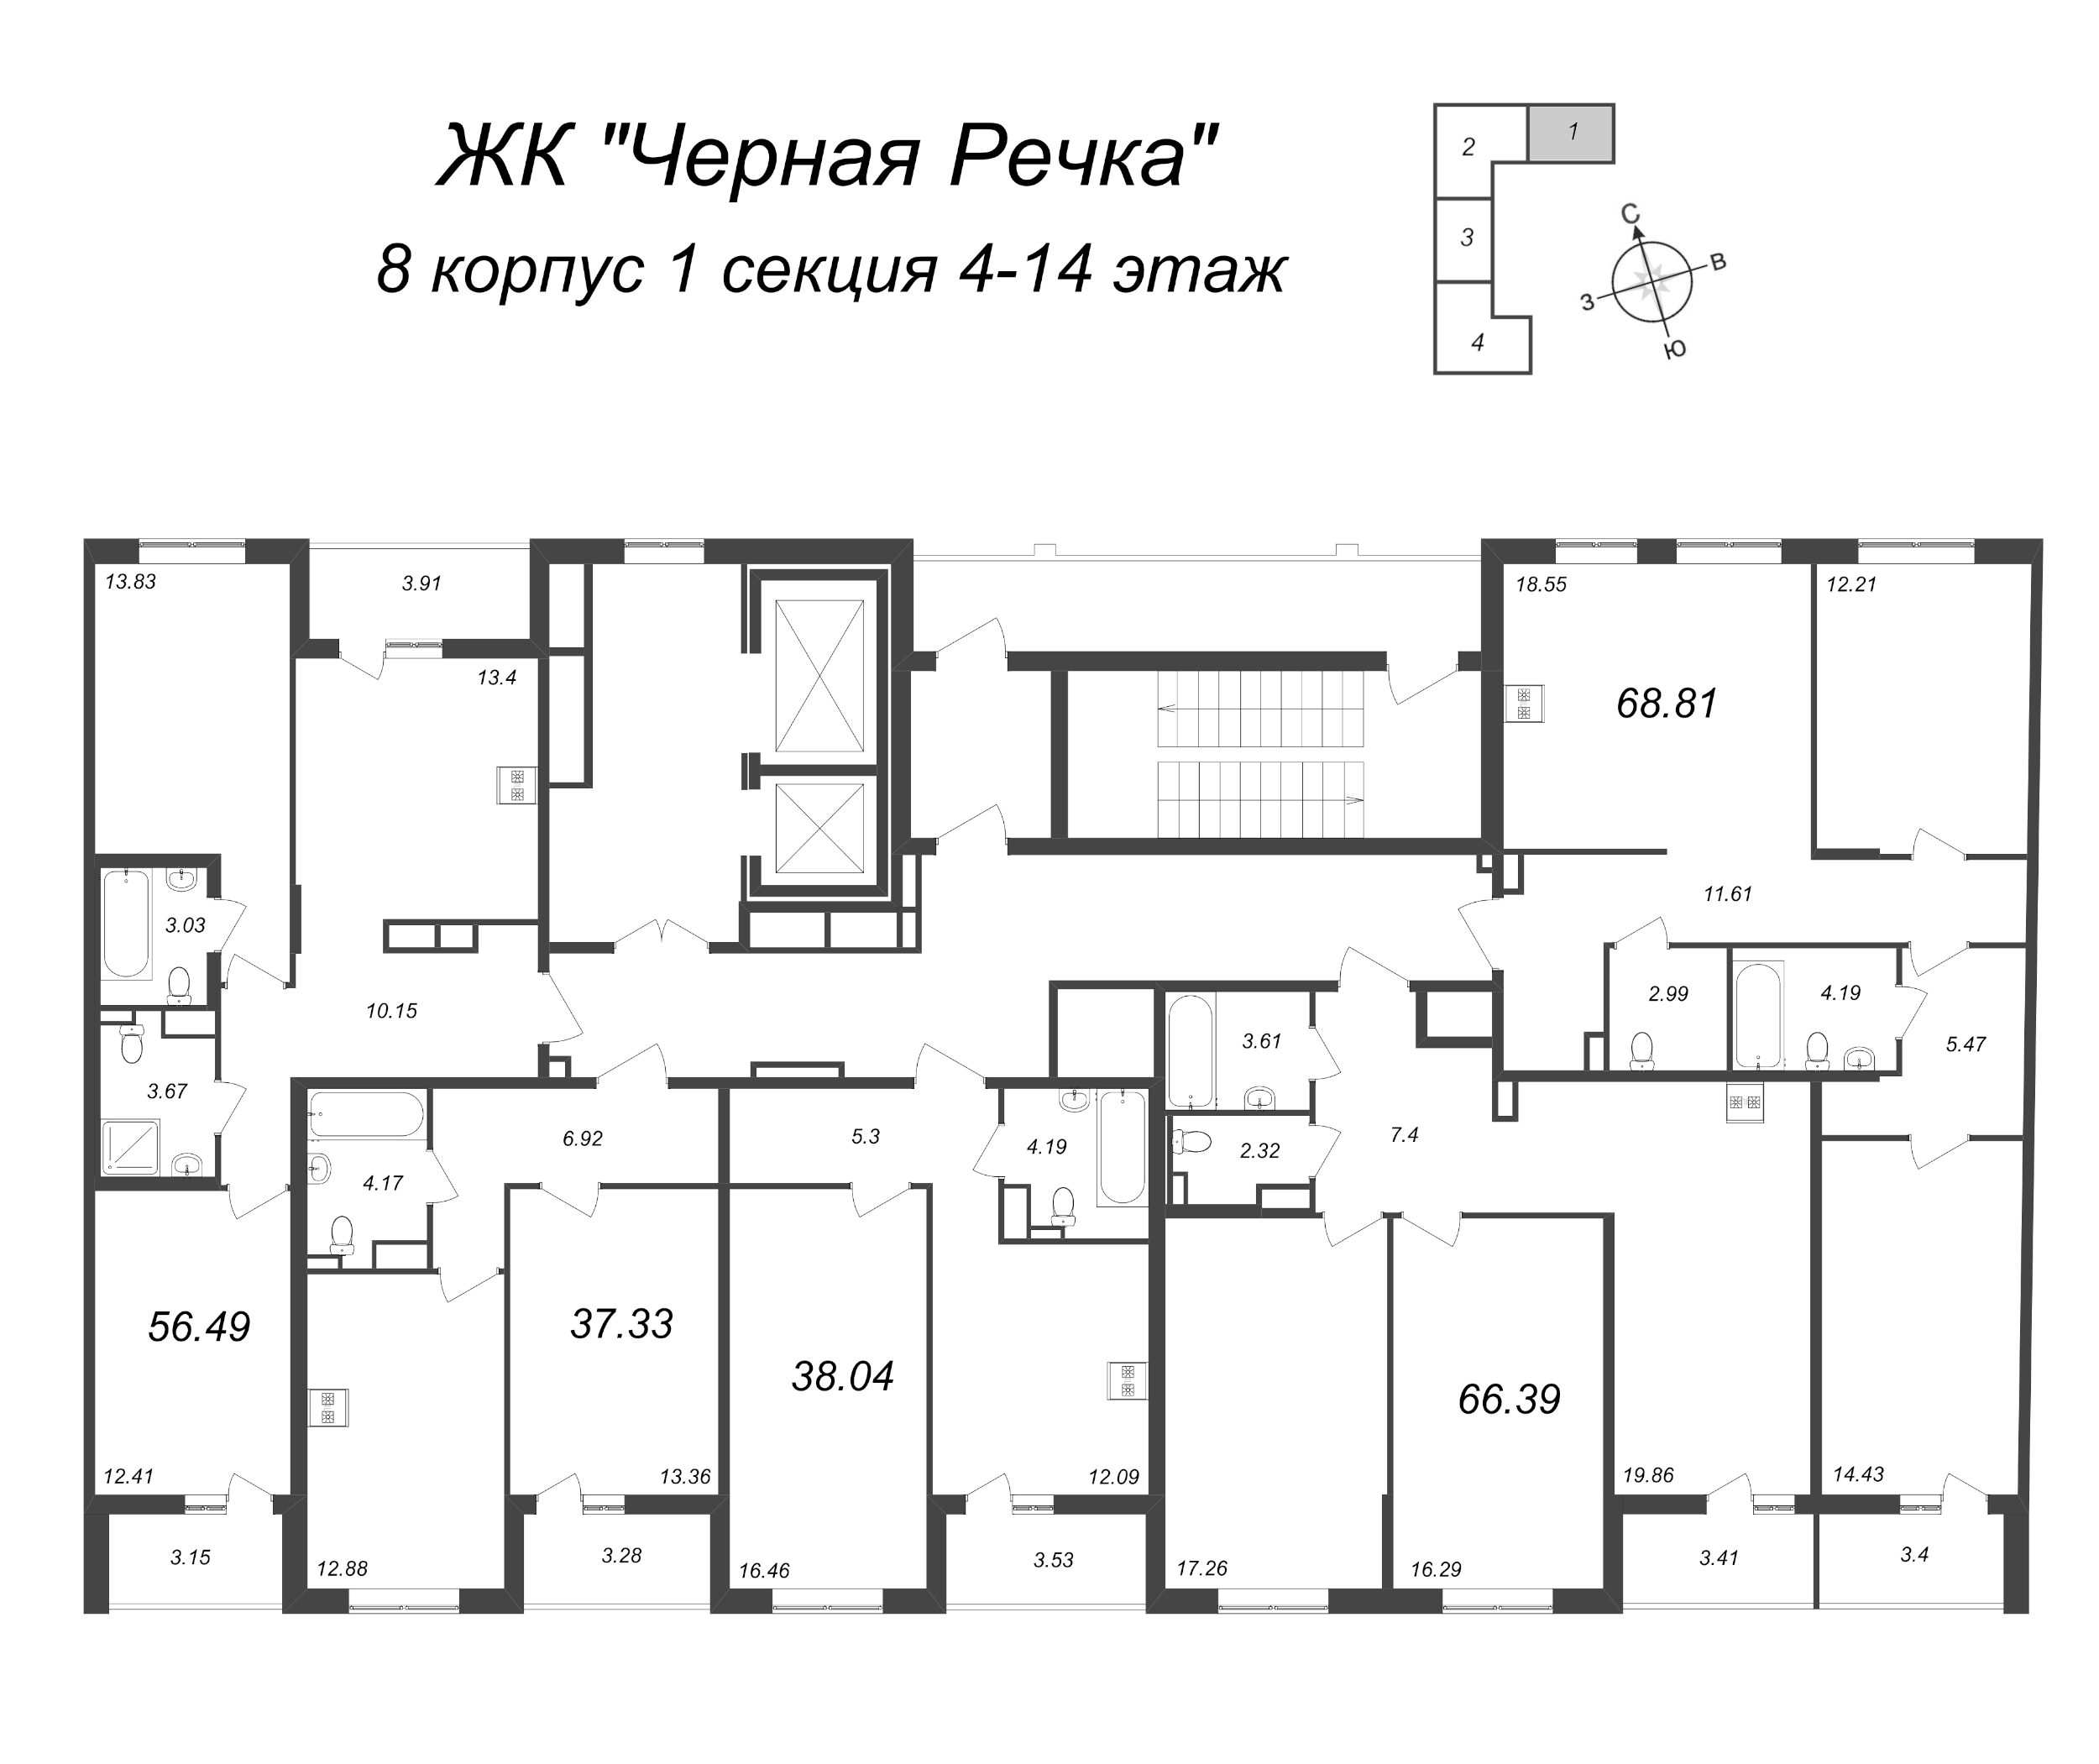 3-комнатная (Евро) квартира, 63.29 м² - планировка этажа